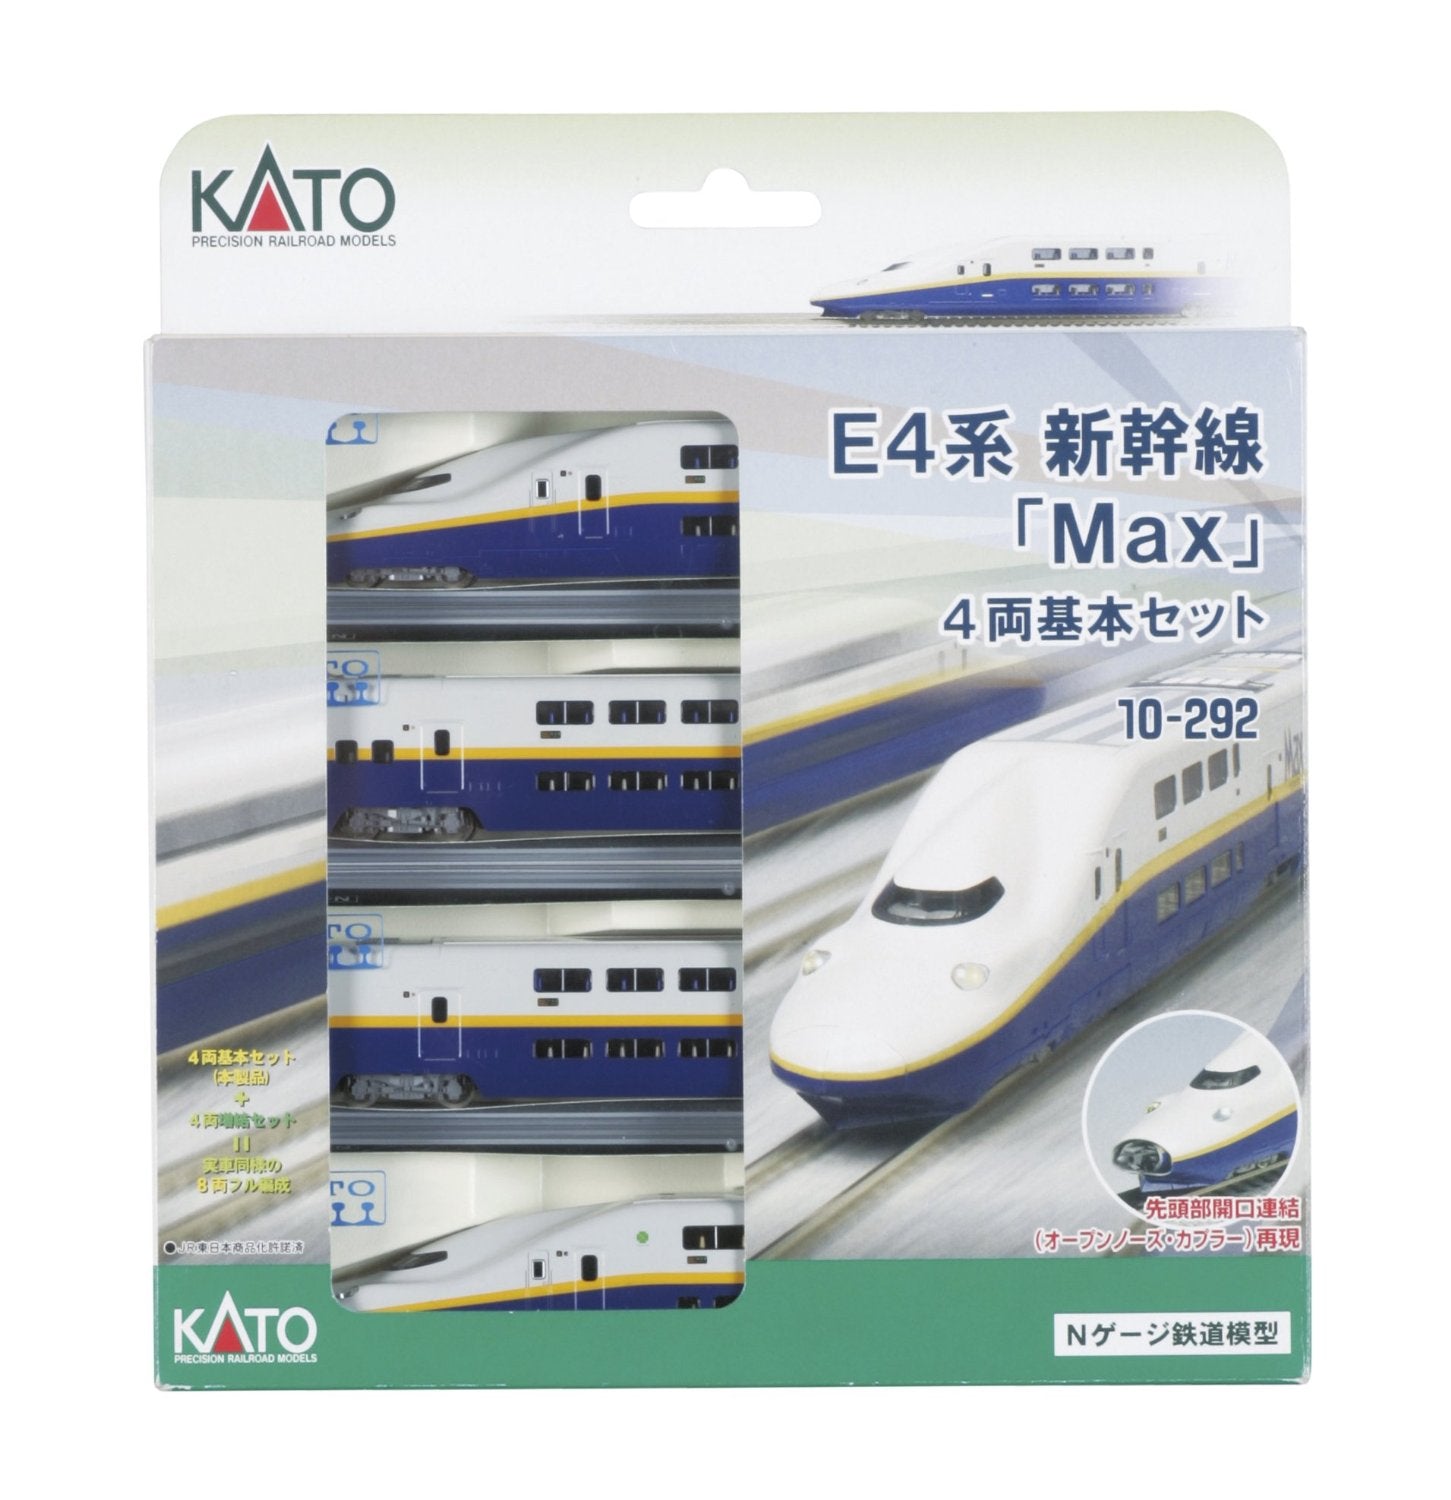 10-292 Series E4 Max Shinkansen 4 Car Set